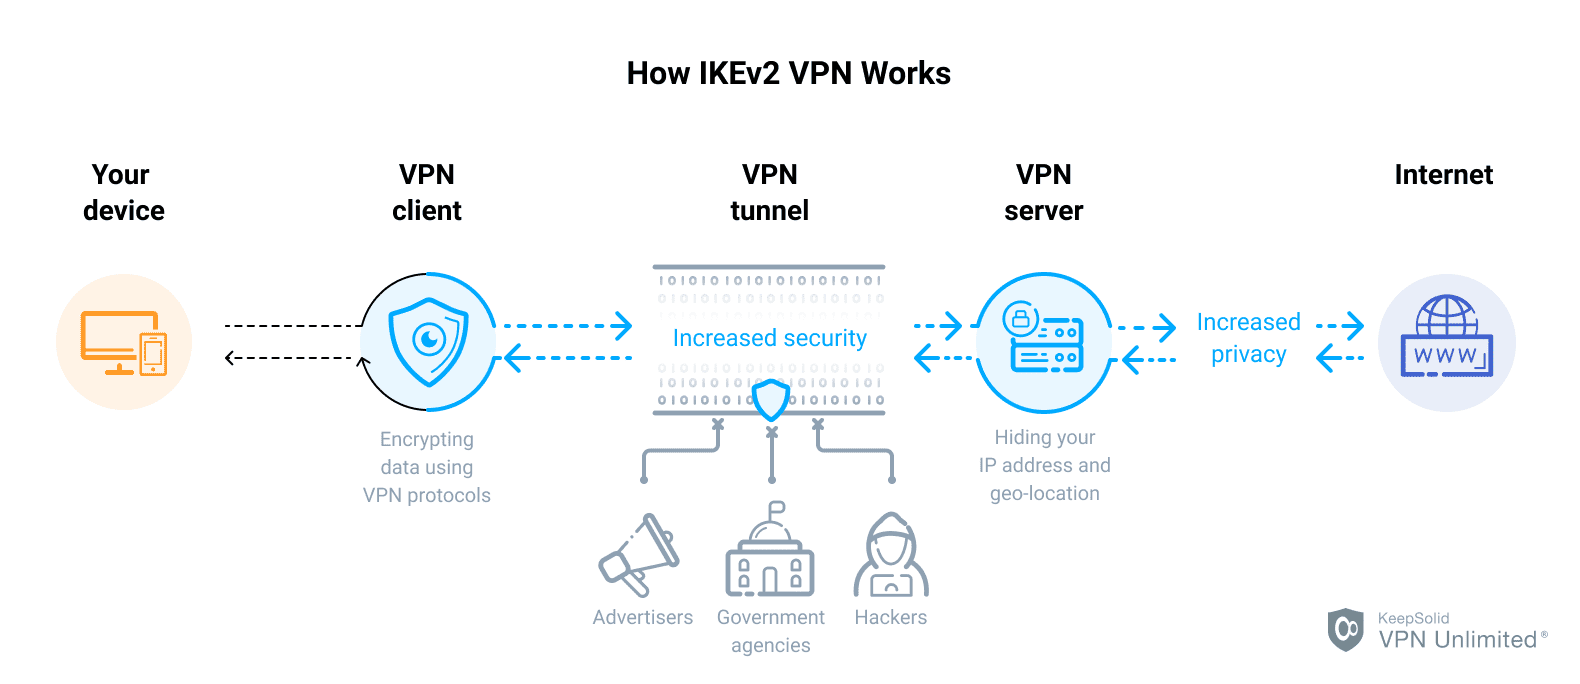 Ce înseamnă iKev2 în VPN?